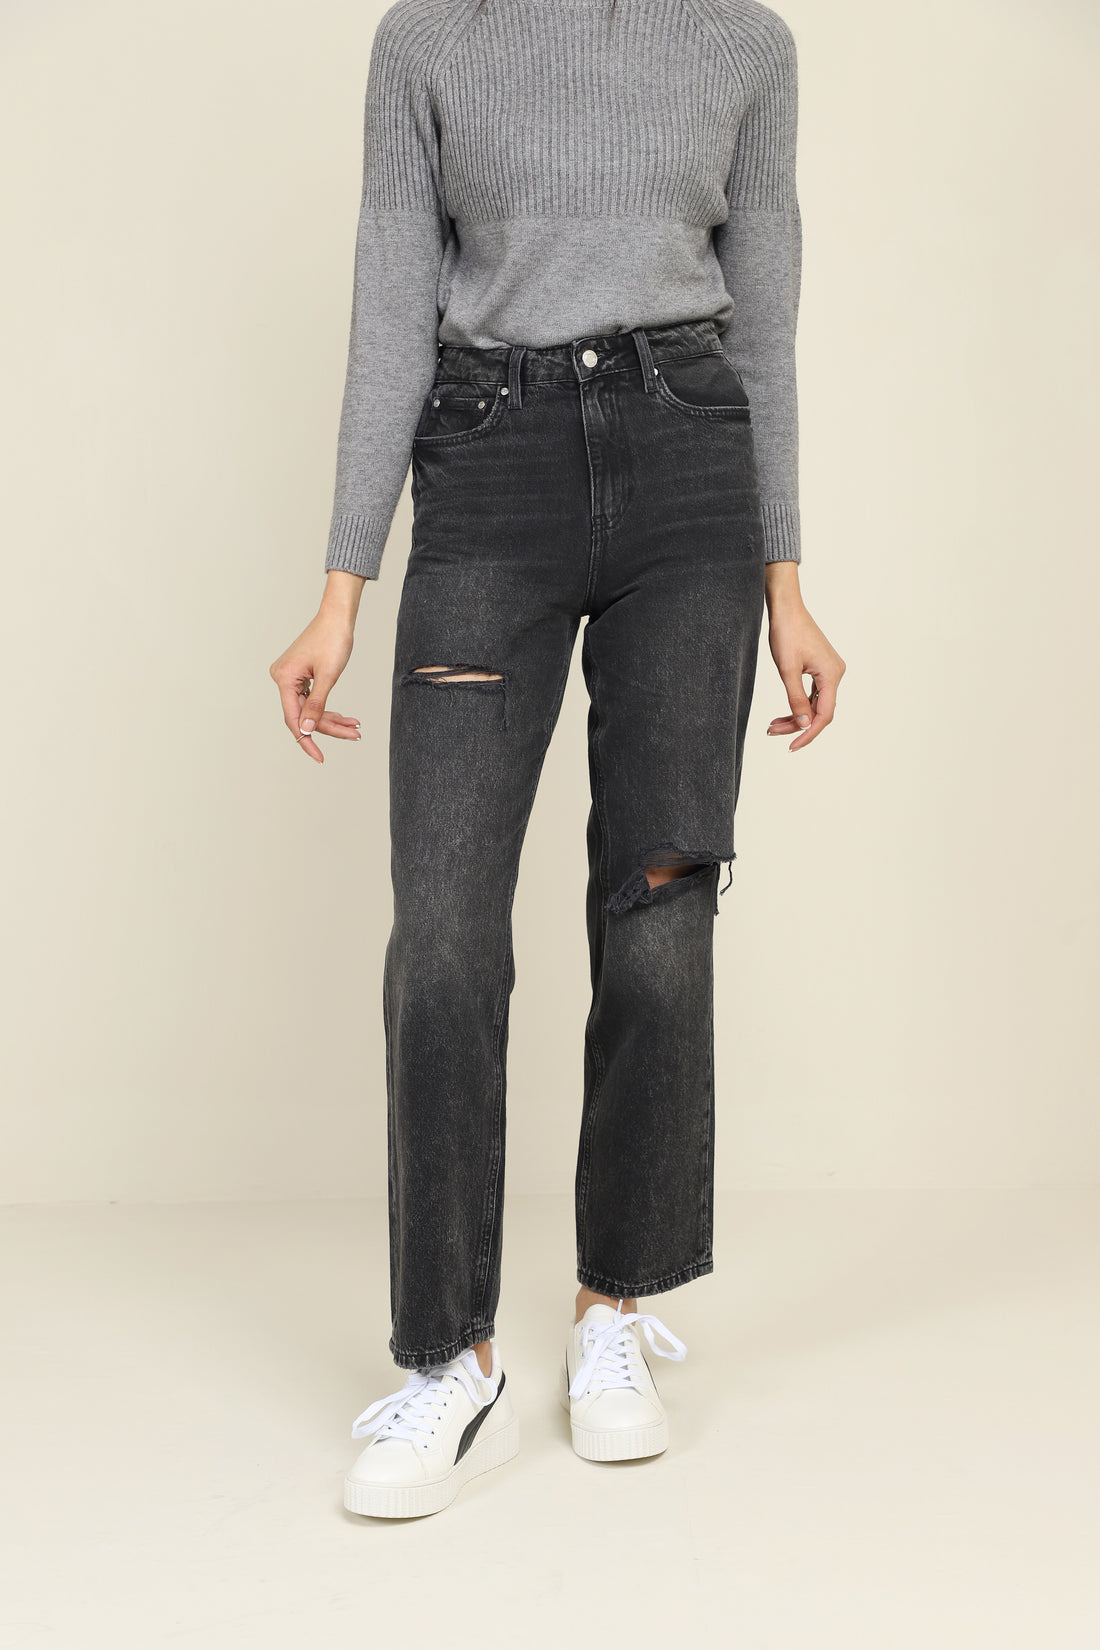 Mabella black jeans